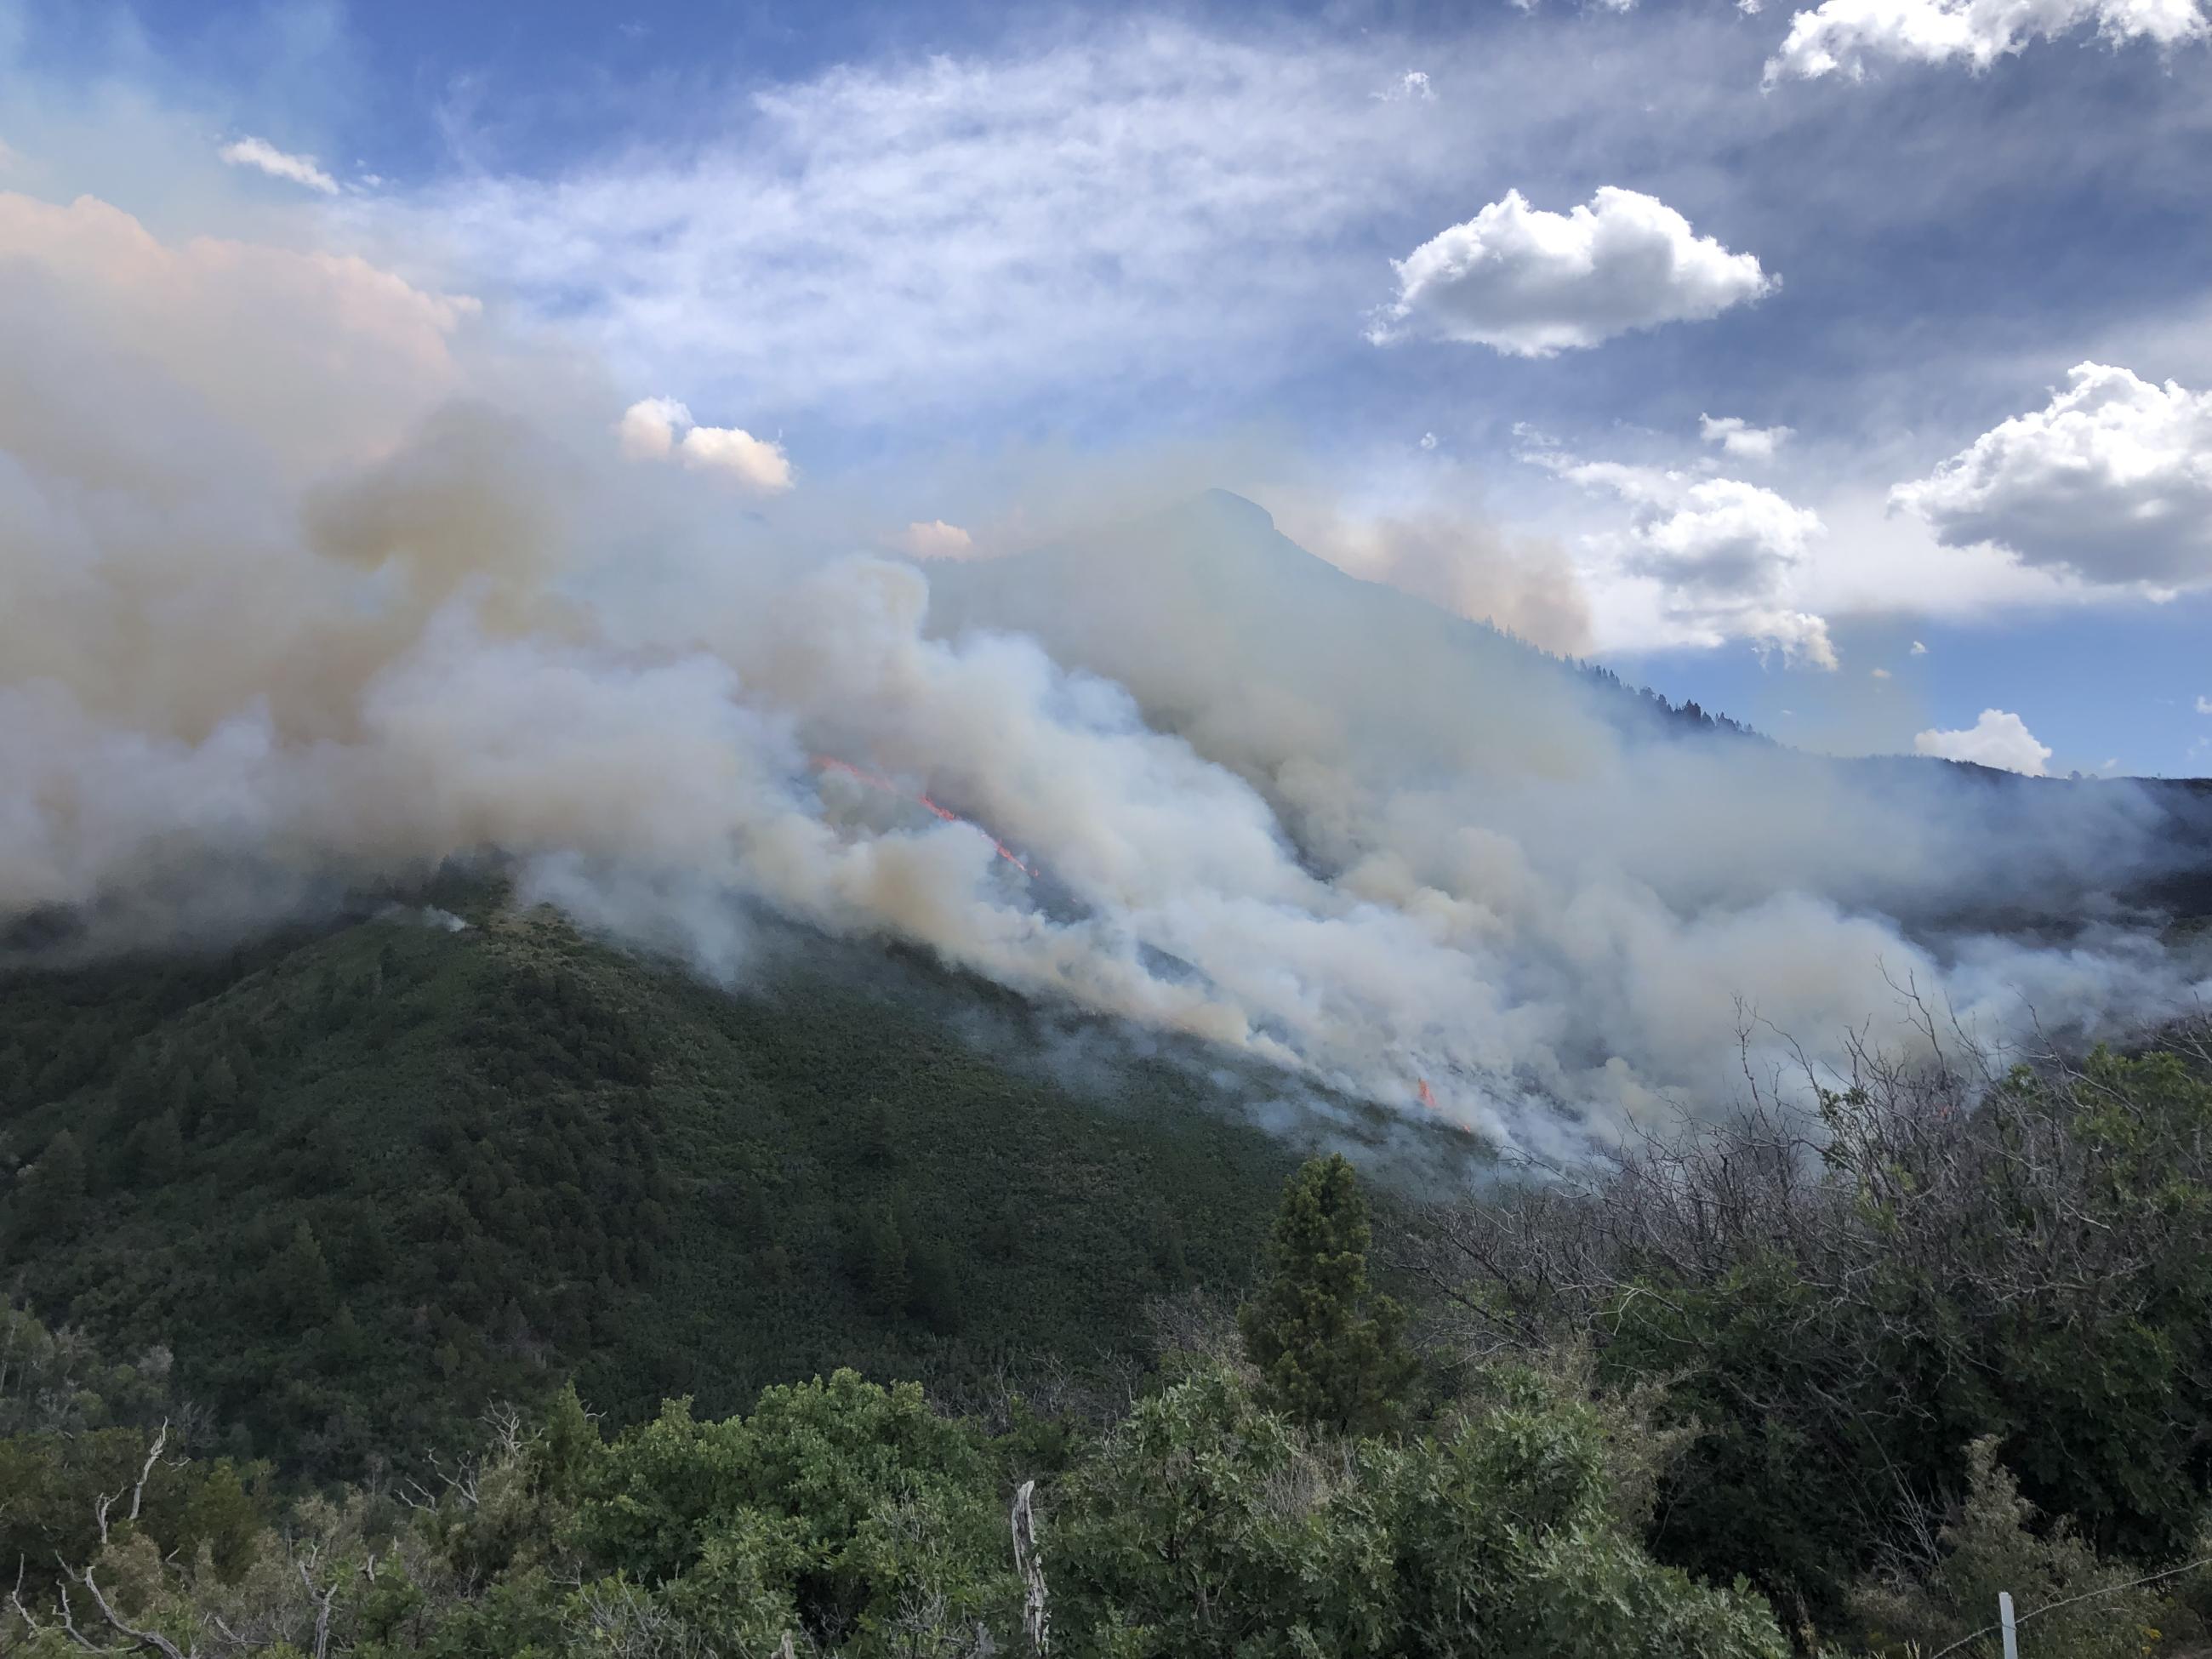 fire and smoke on a mountain July 6